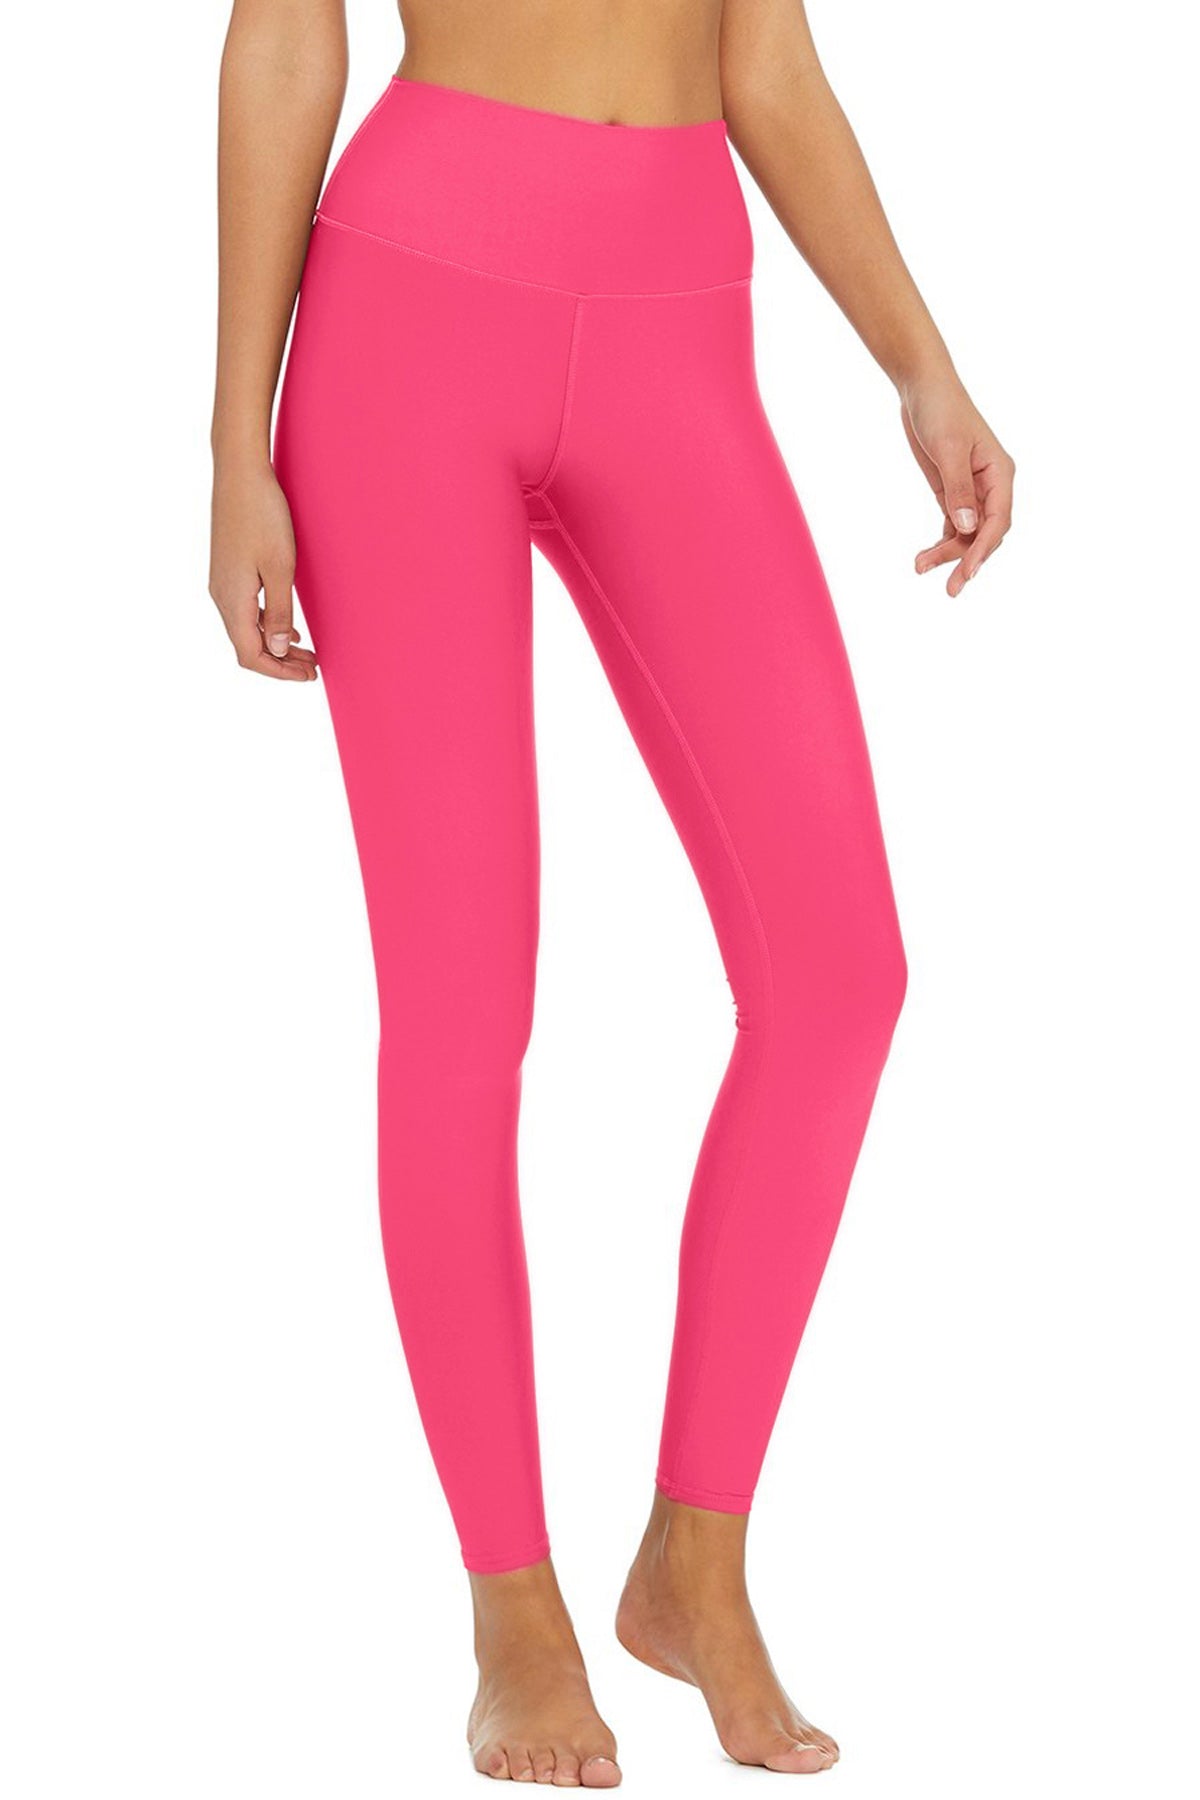 Neon Pink UV 50+ Lucy Bright Performance Leggings Yoga Pants - Women - Pineapple Clothing